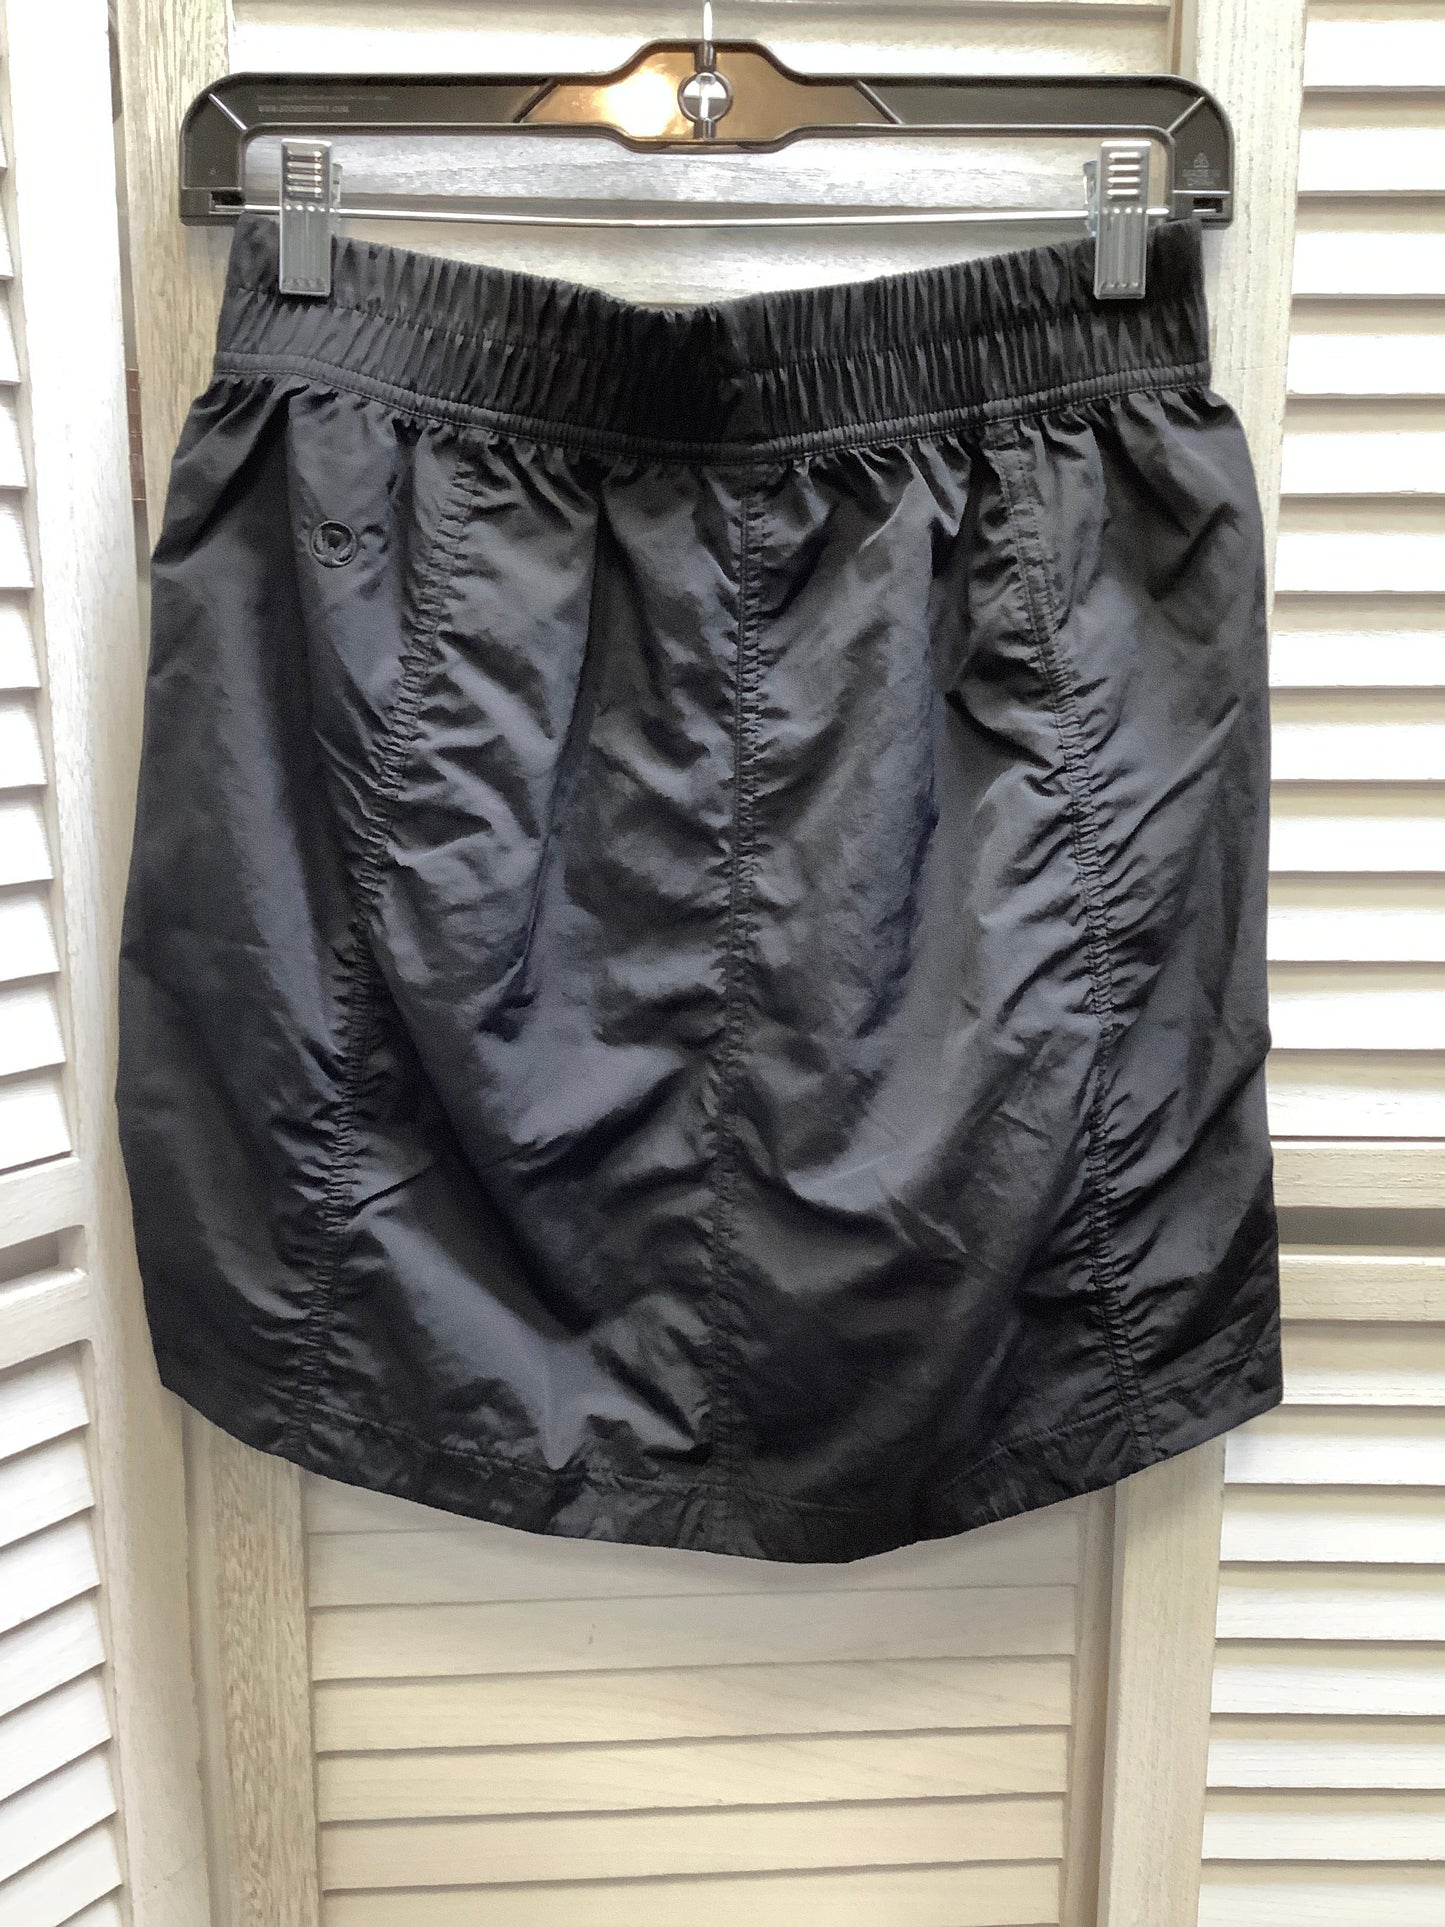 Black Athletic Skirt Lululemon, Size S